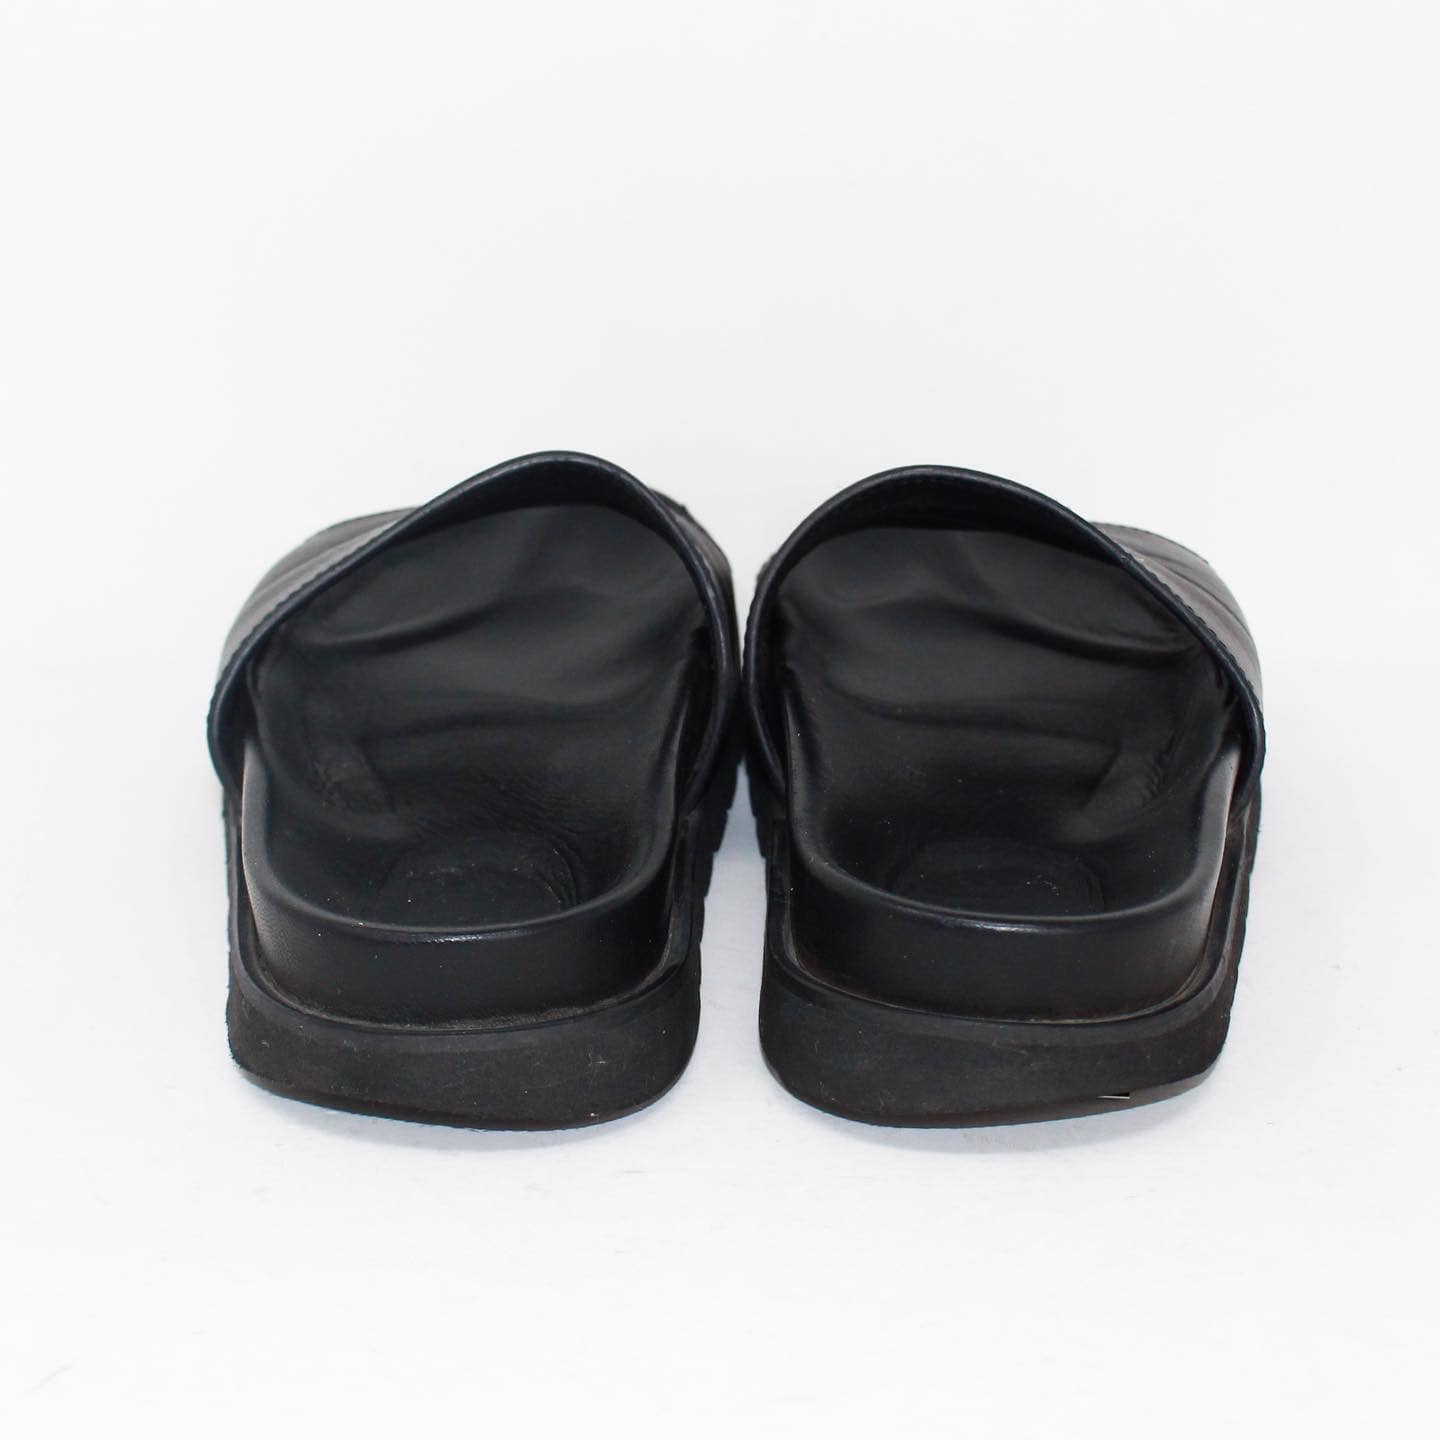 GIUSEPPE ZANOTTI 39161 Black Leather Sandals US 7 EU 37 d